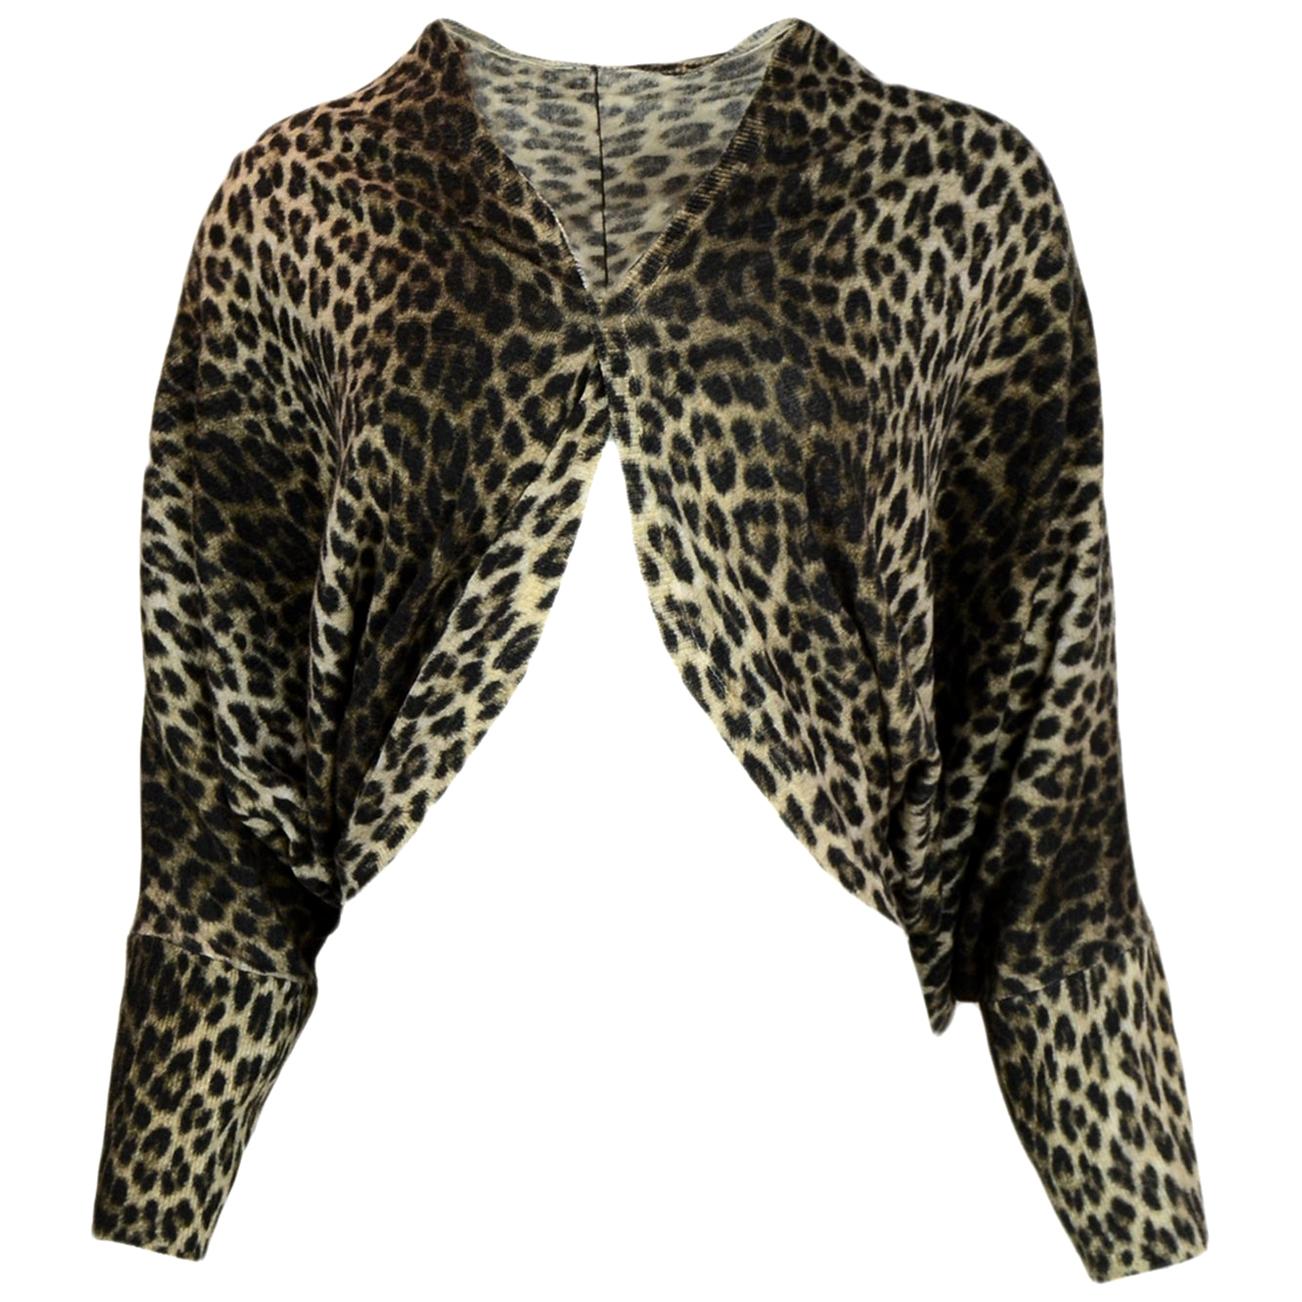 Lanvin NWT Leopard Print Cocoon Sweater sz Medium rt $1, 985